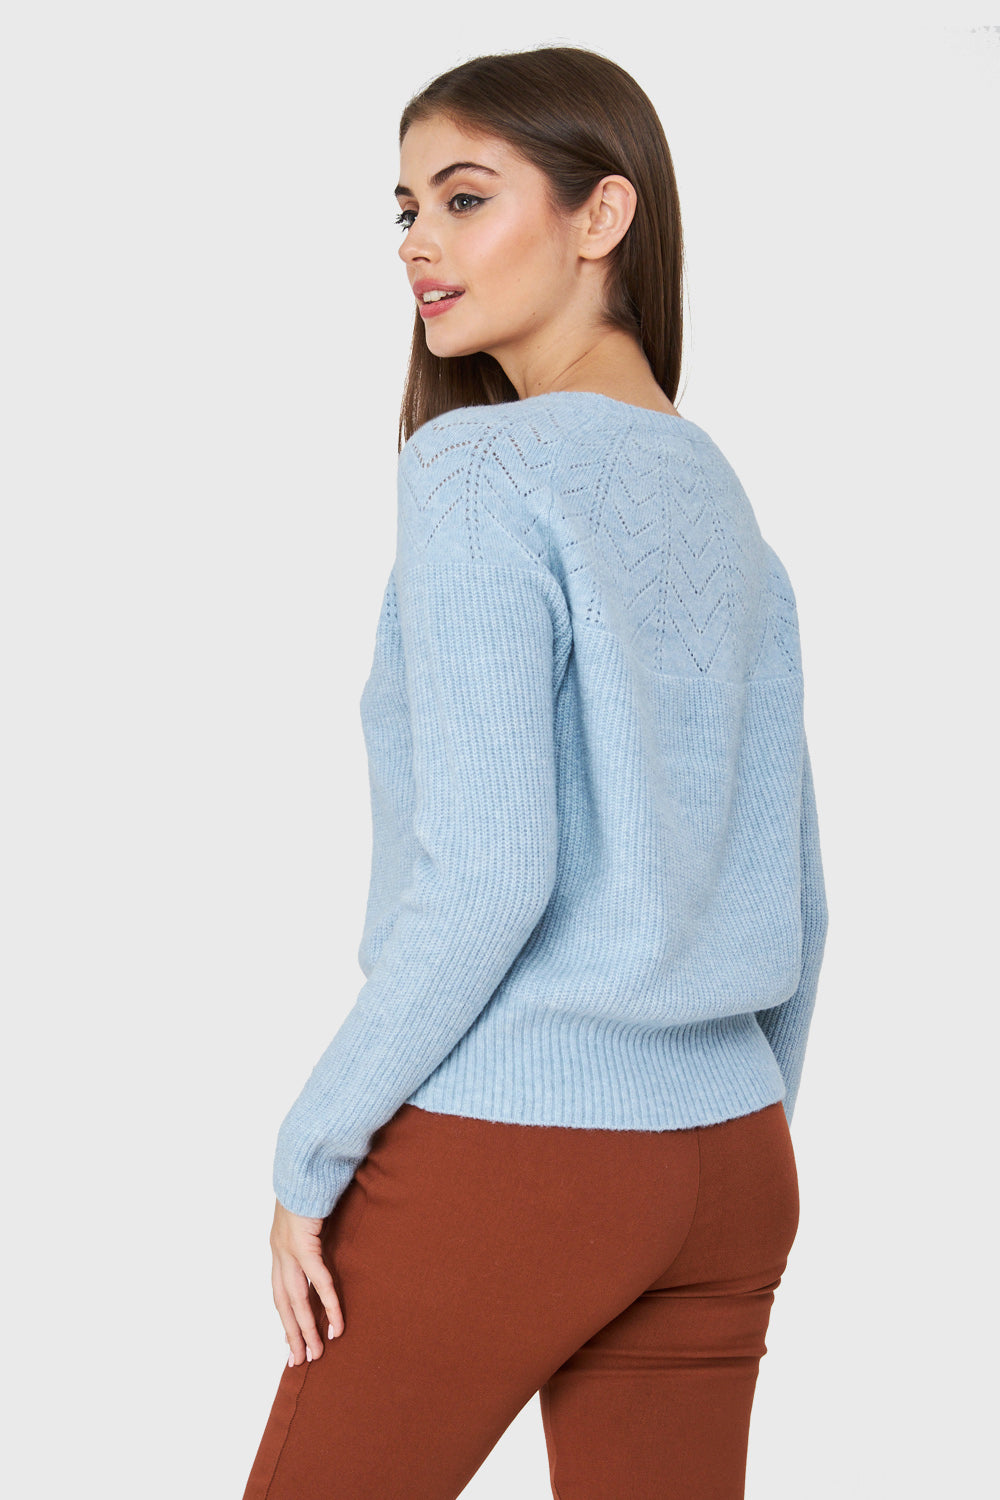 Sweater Detalle Punto Calado Celeste